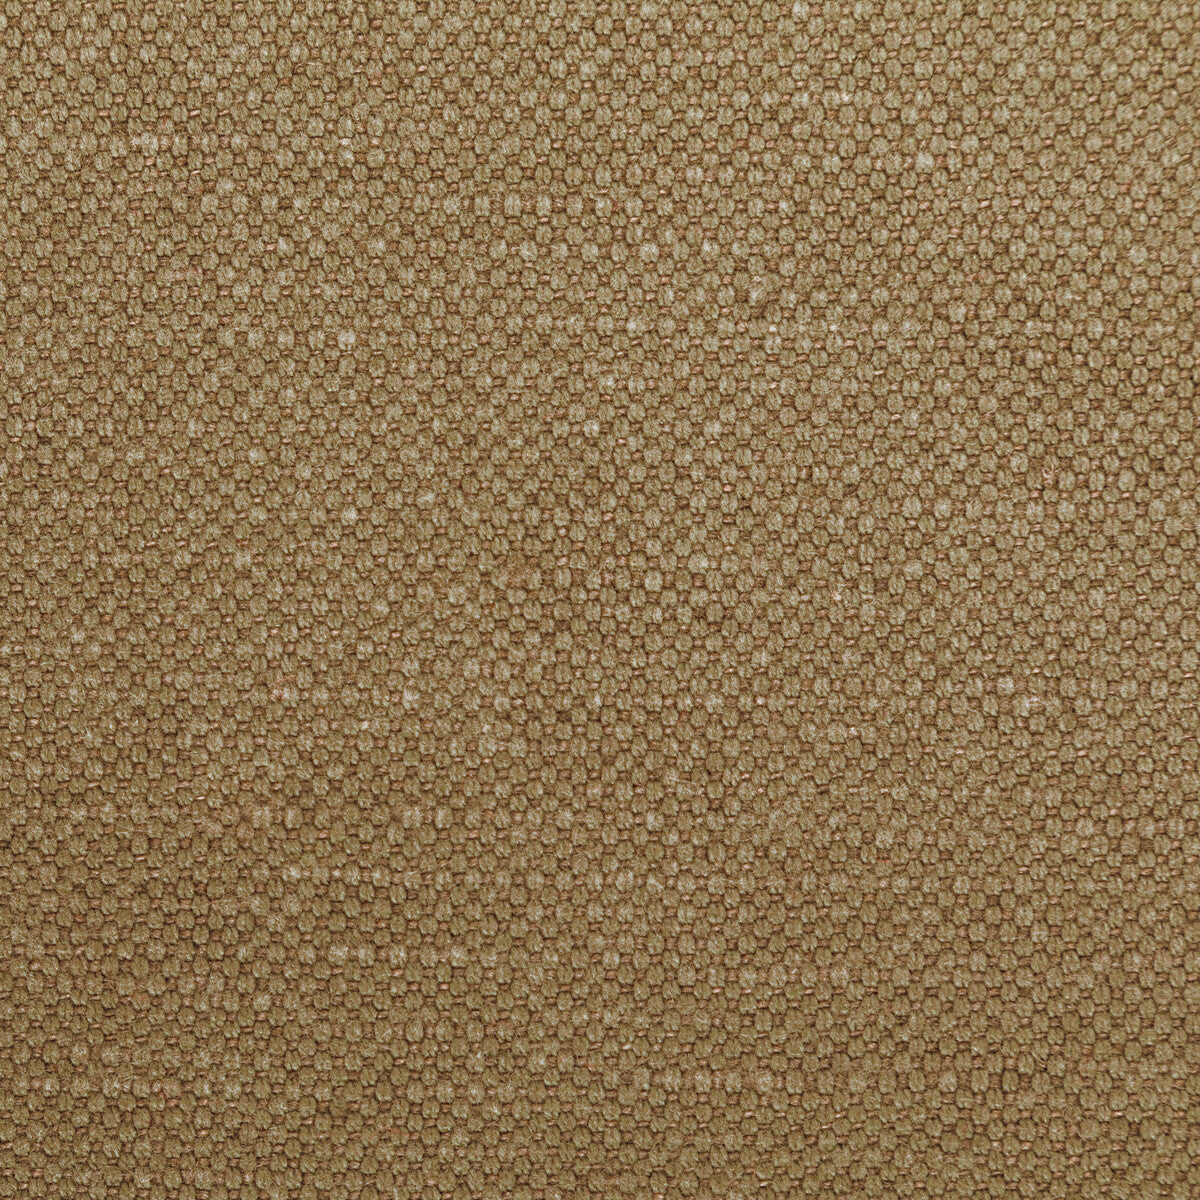 Carson fabric in deer color - pattern 36282.630.0 - by Kravet Basics